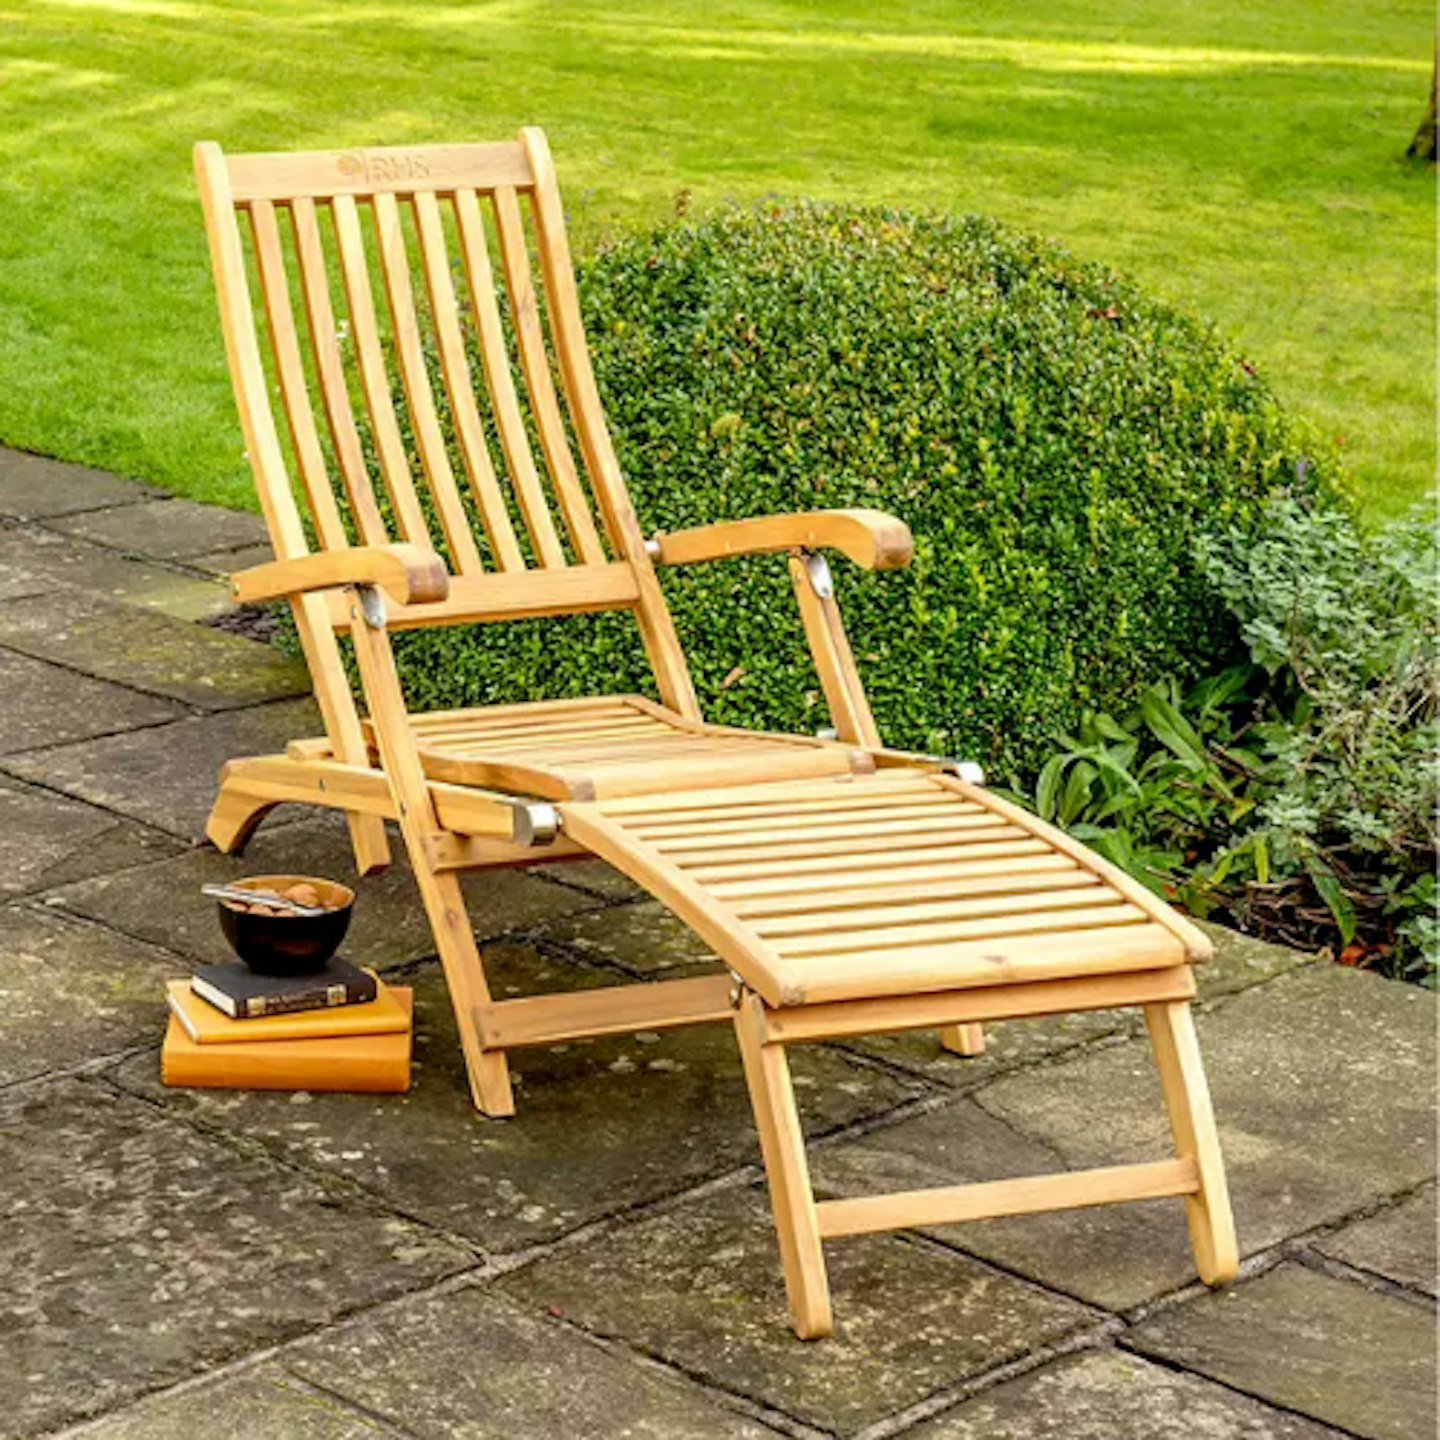 KETTLER RHS Chelsea Garden Steamer Chair